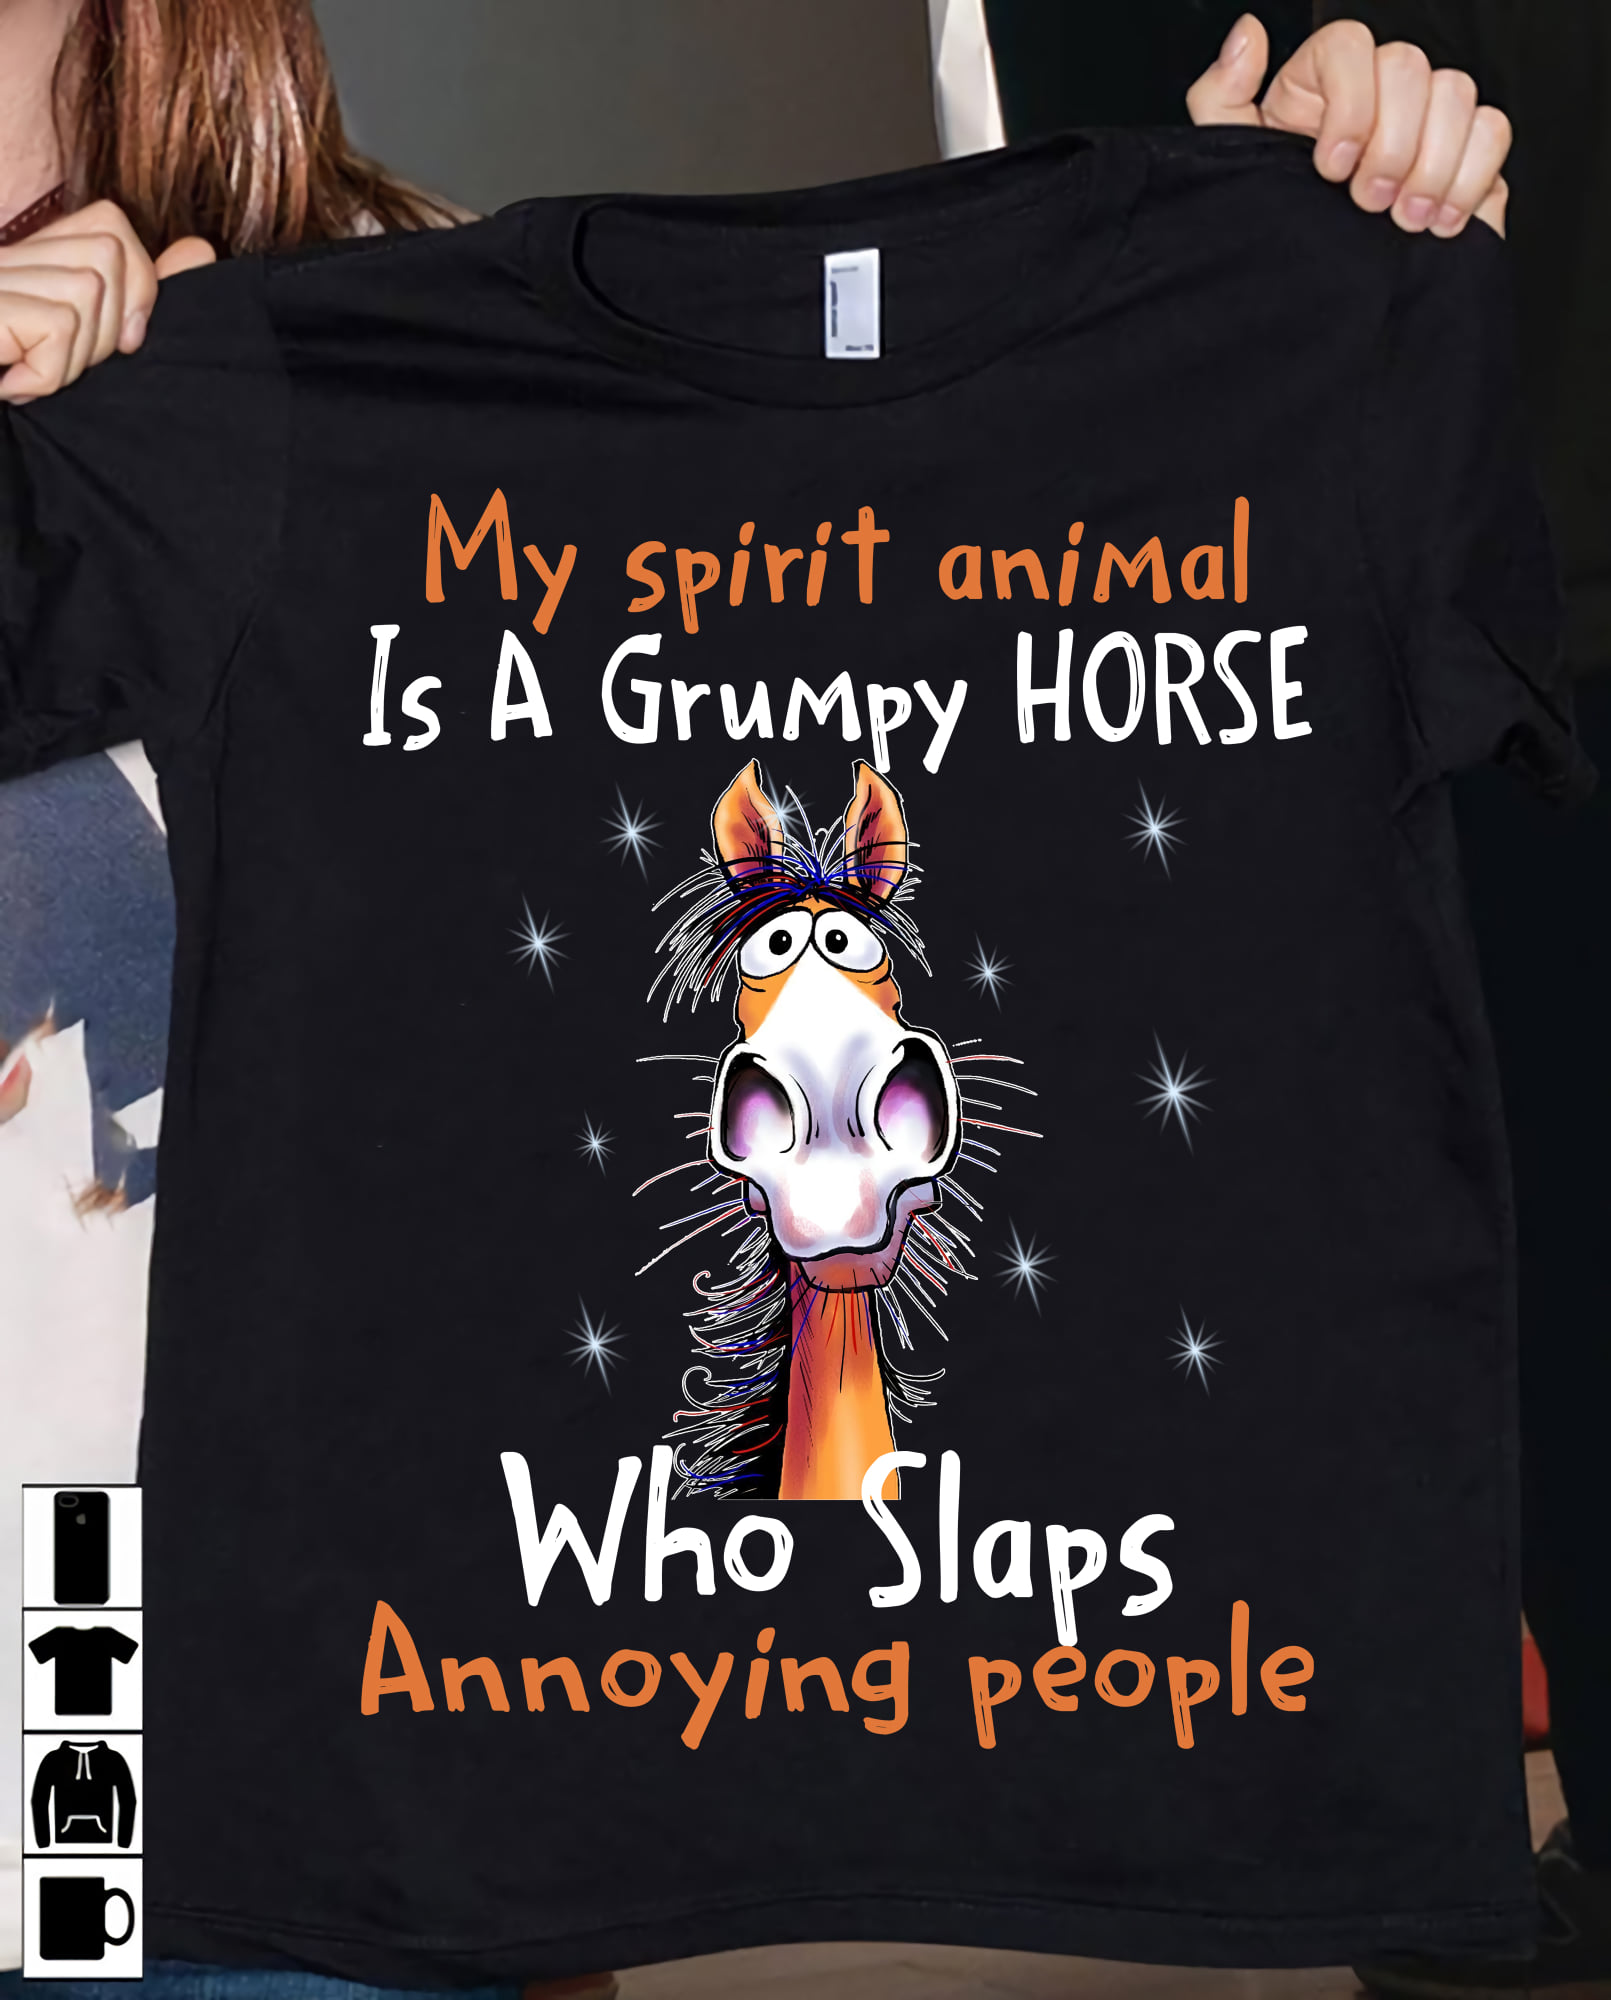 My spirit animal is a grumpy horse who slaps annoying people